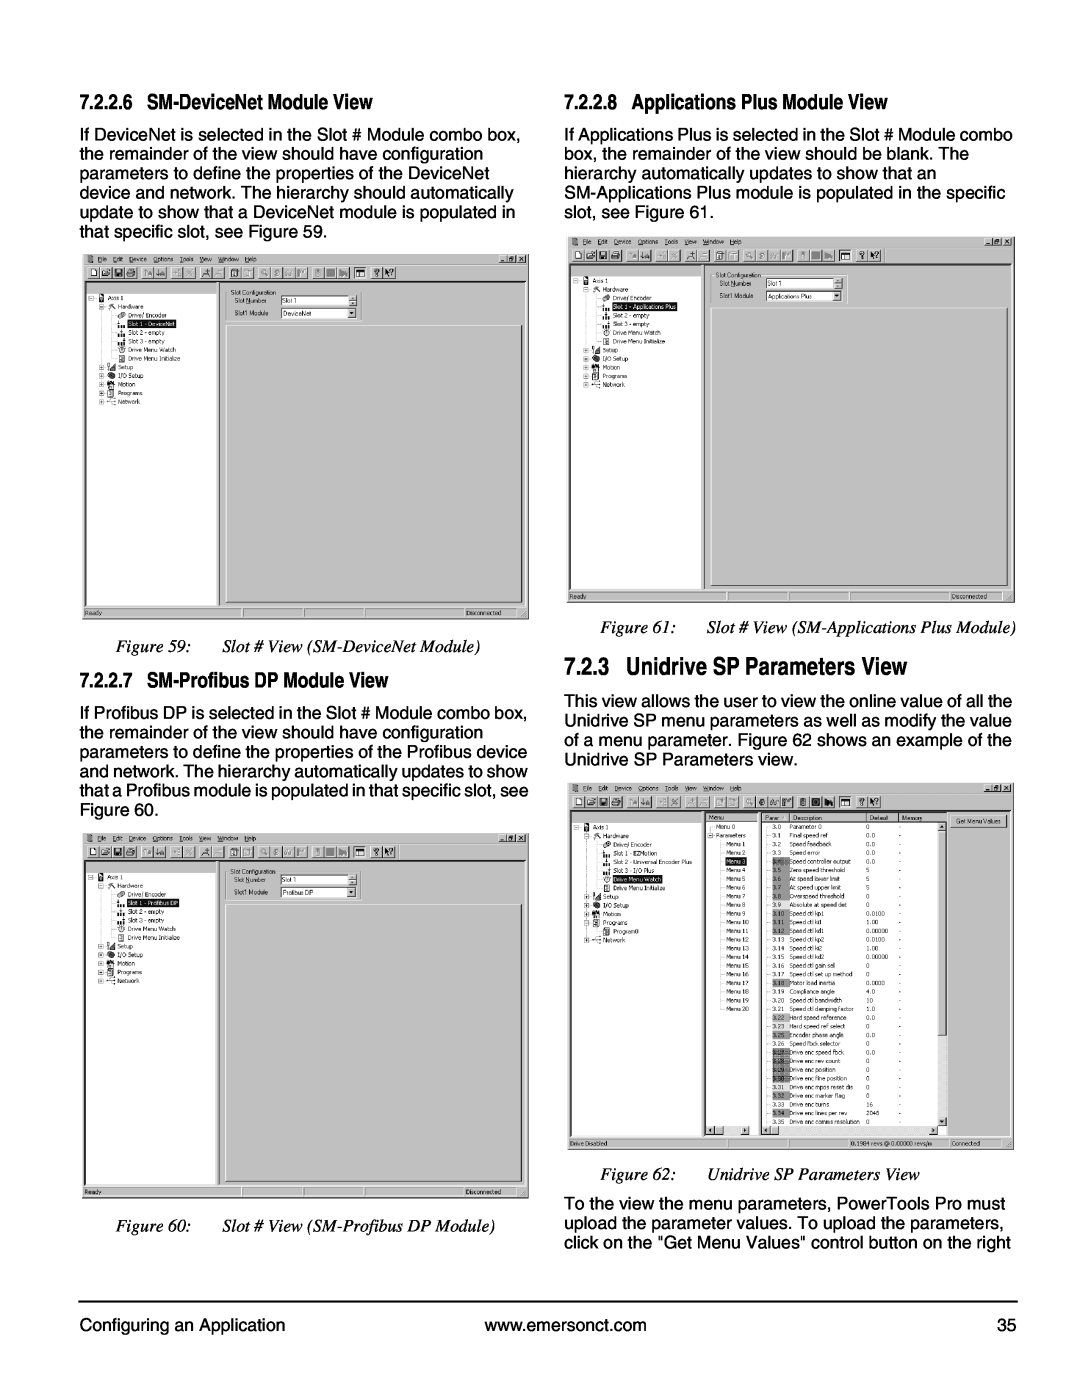 Emerson P/N 400361-00 manual Unidrive SP Parameters View, SM-DeviceNet Module View, Applications Plus Module View 